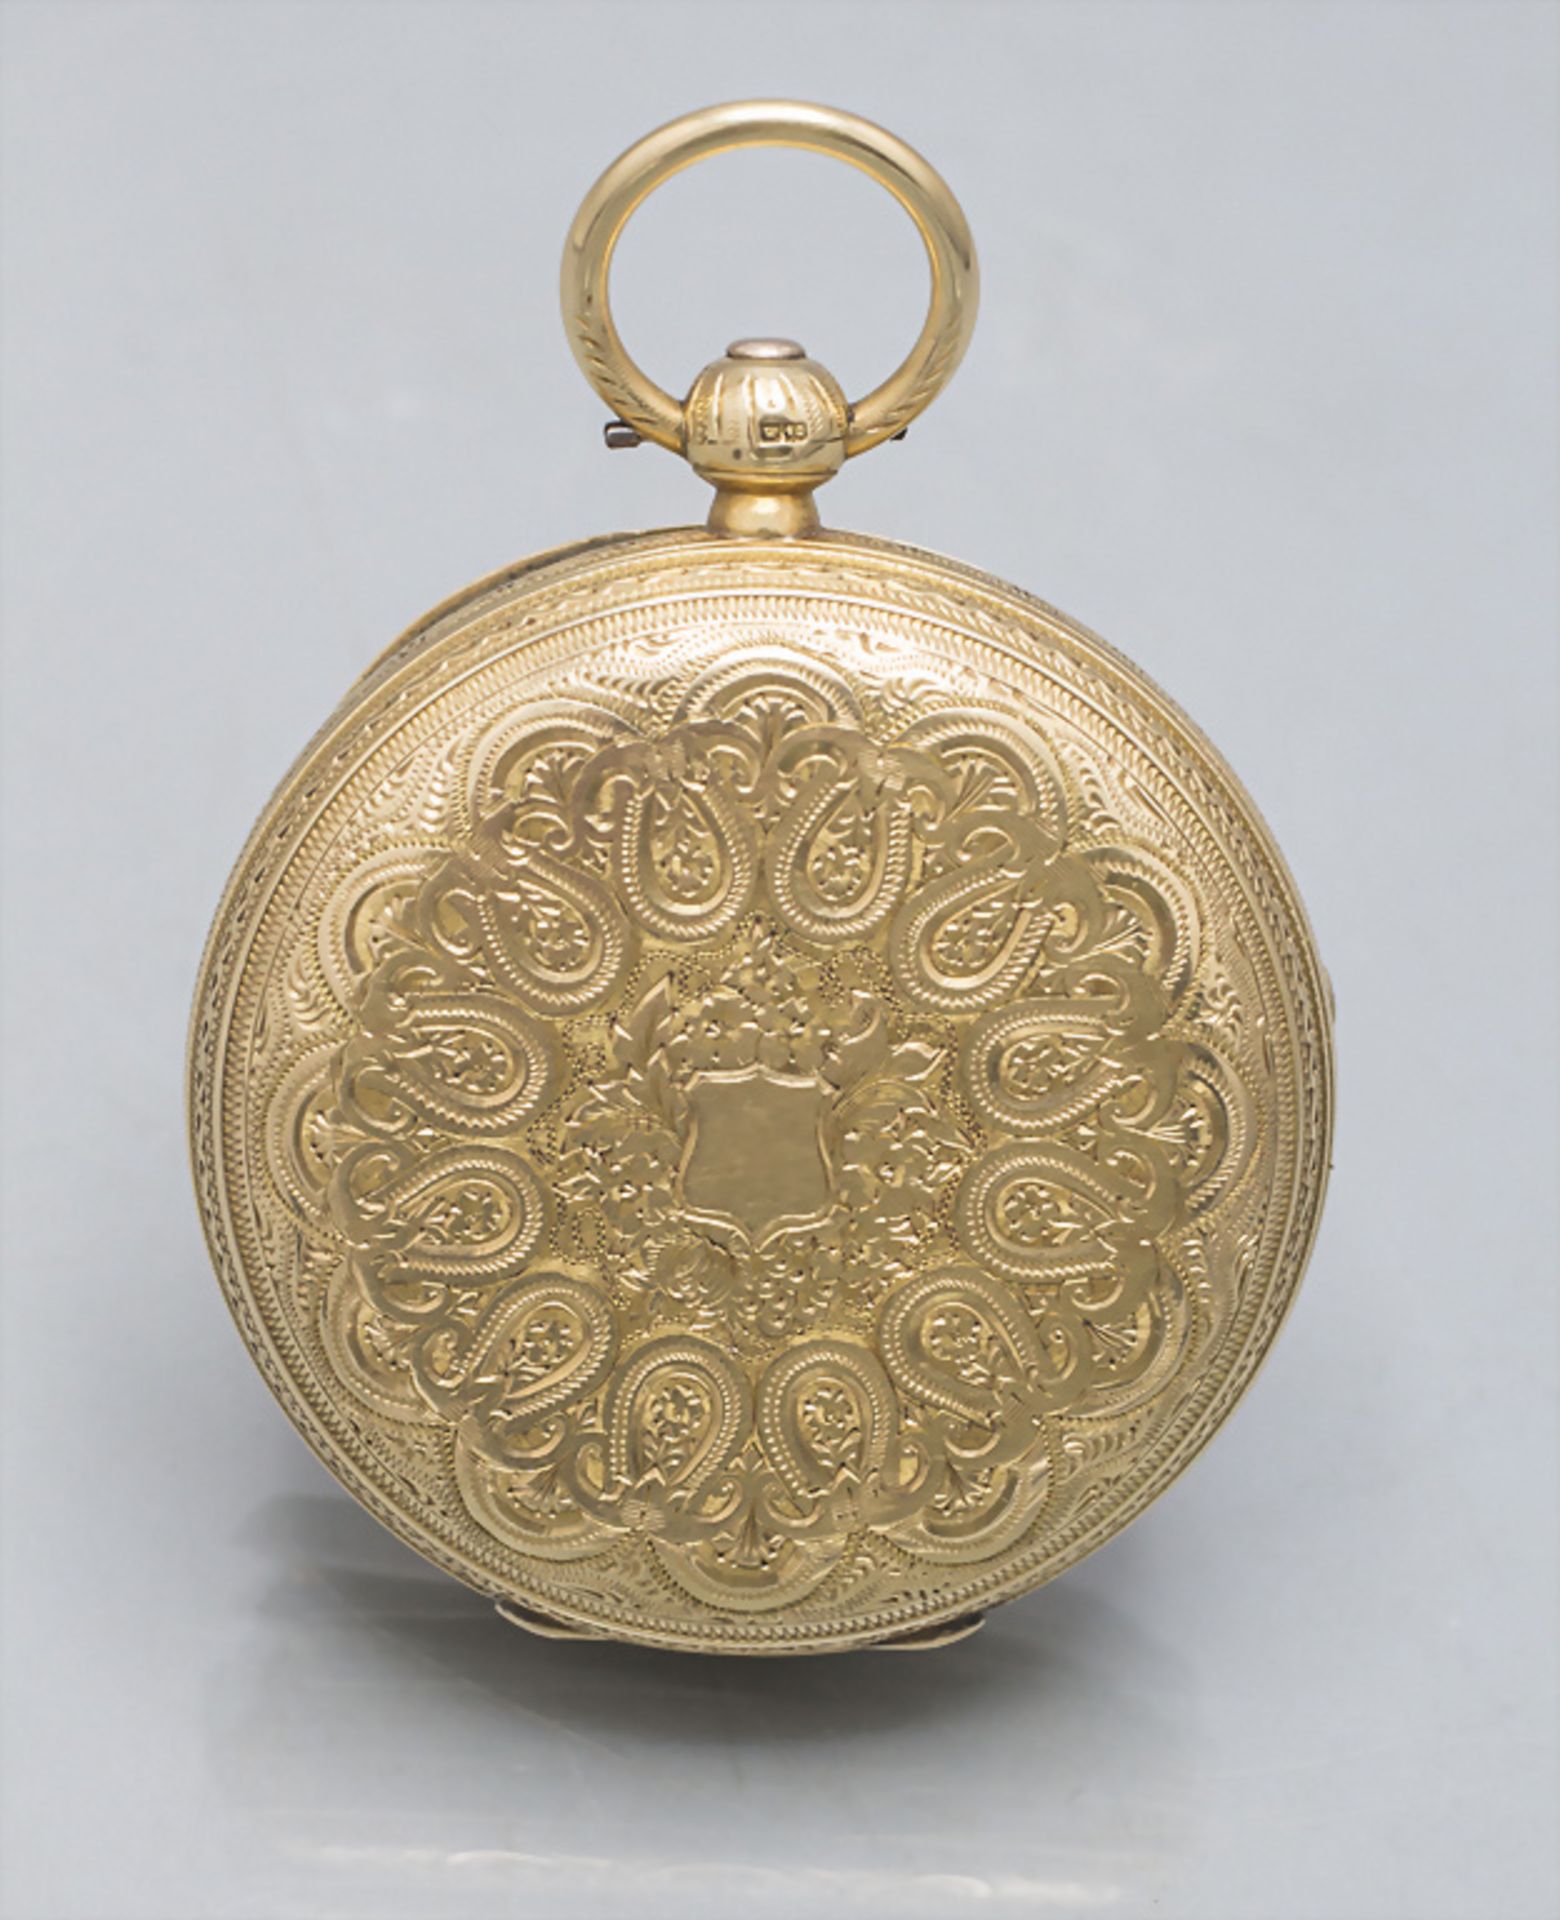 Offene Taschenuhr / An 18 ct gold open faced pocket watch, England, um 1901 - Bild 2 aus 5